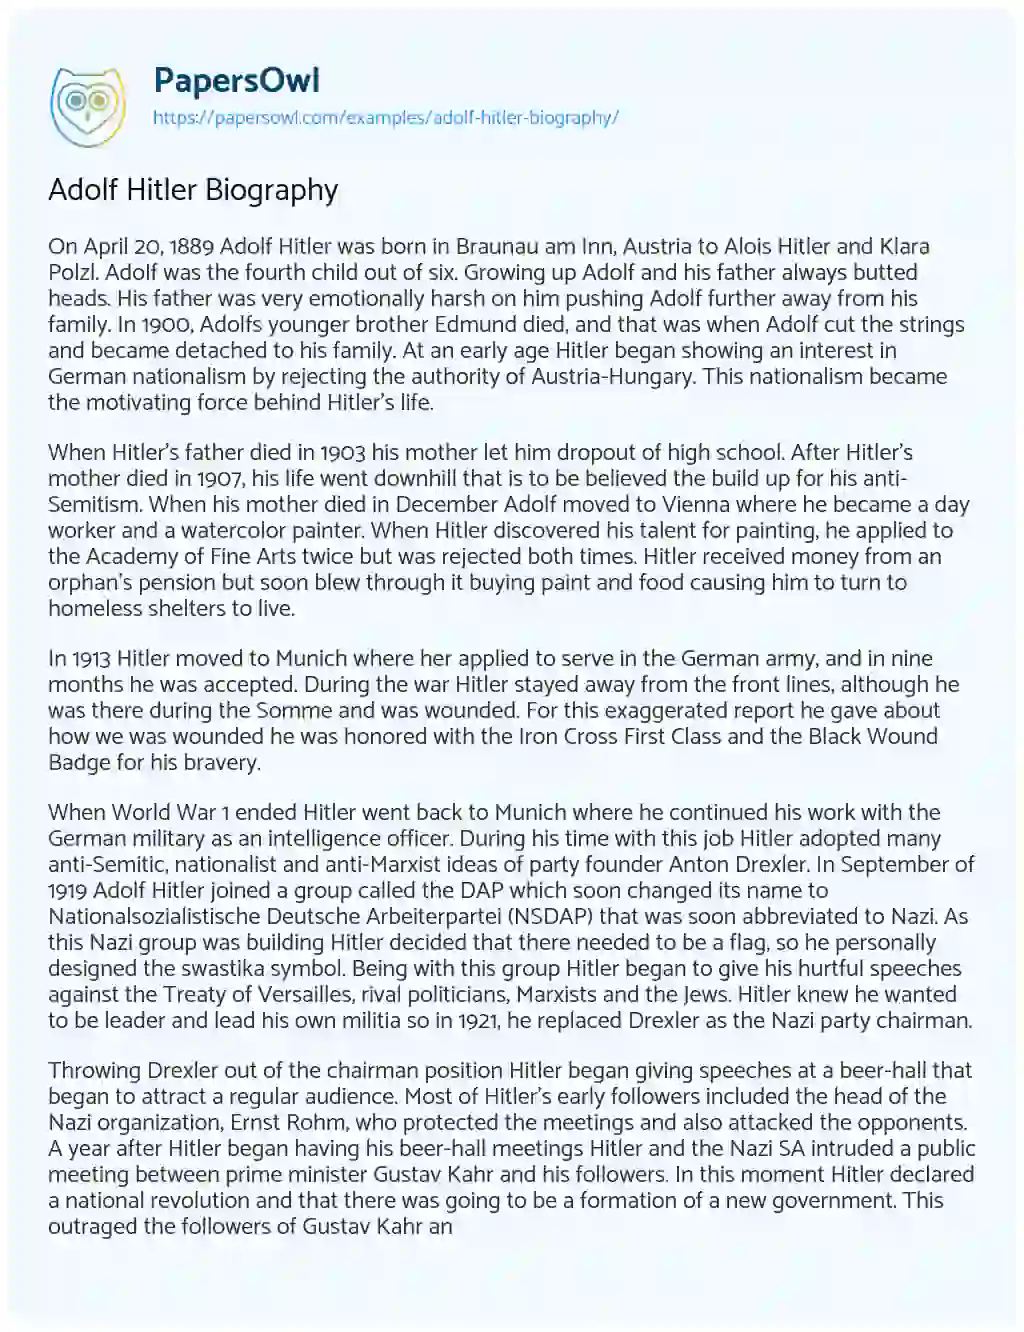 Essay on Adolf Hitler Biography